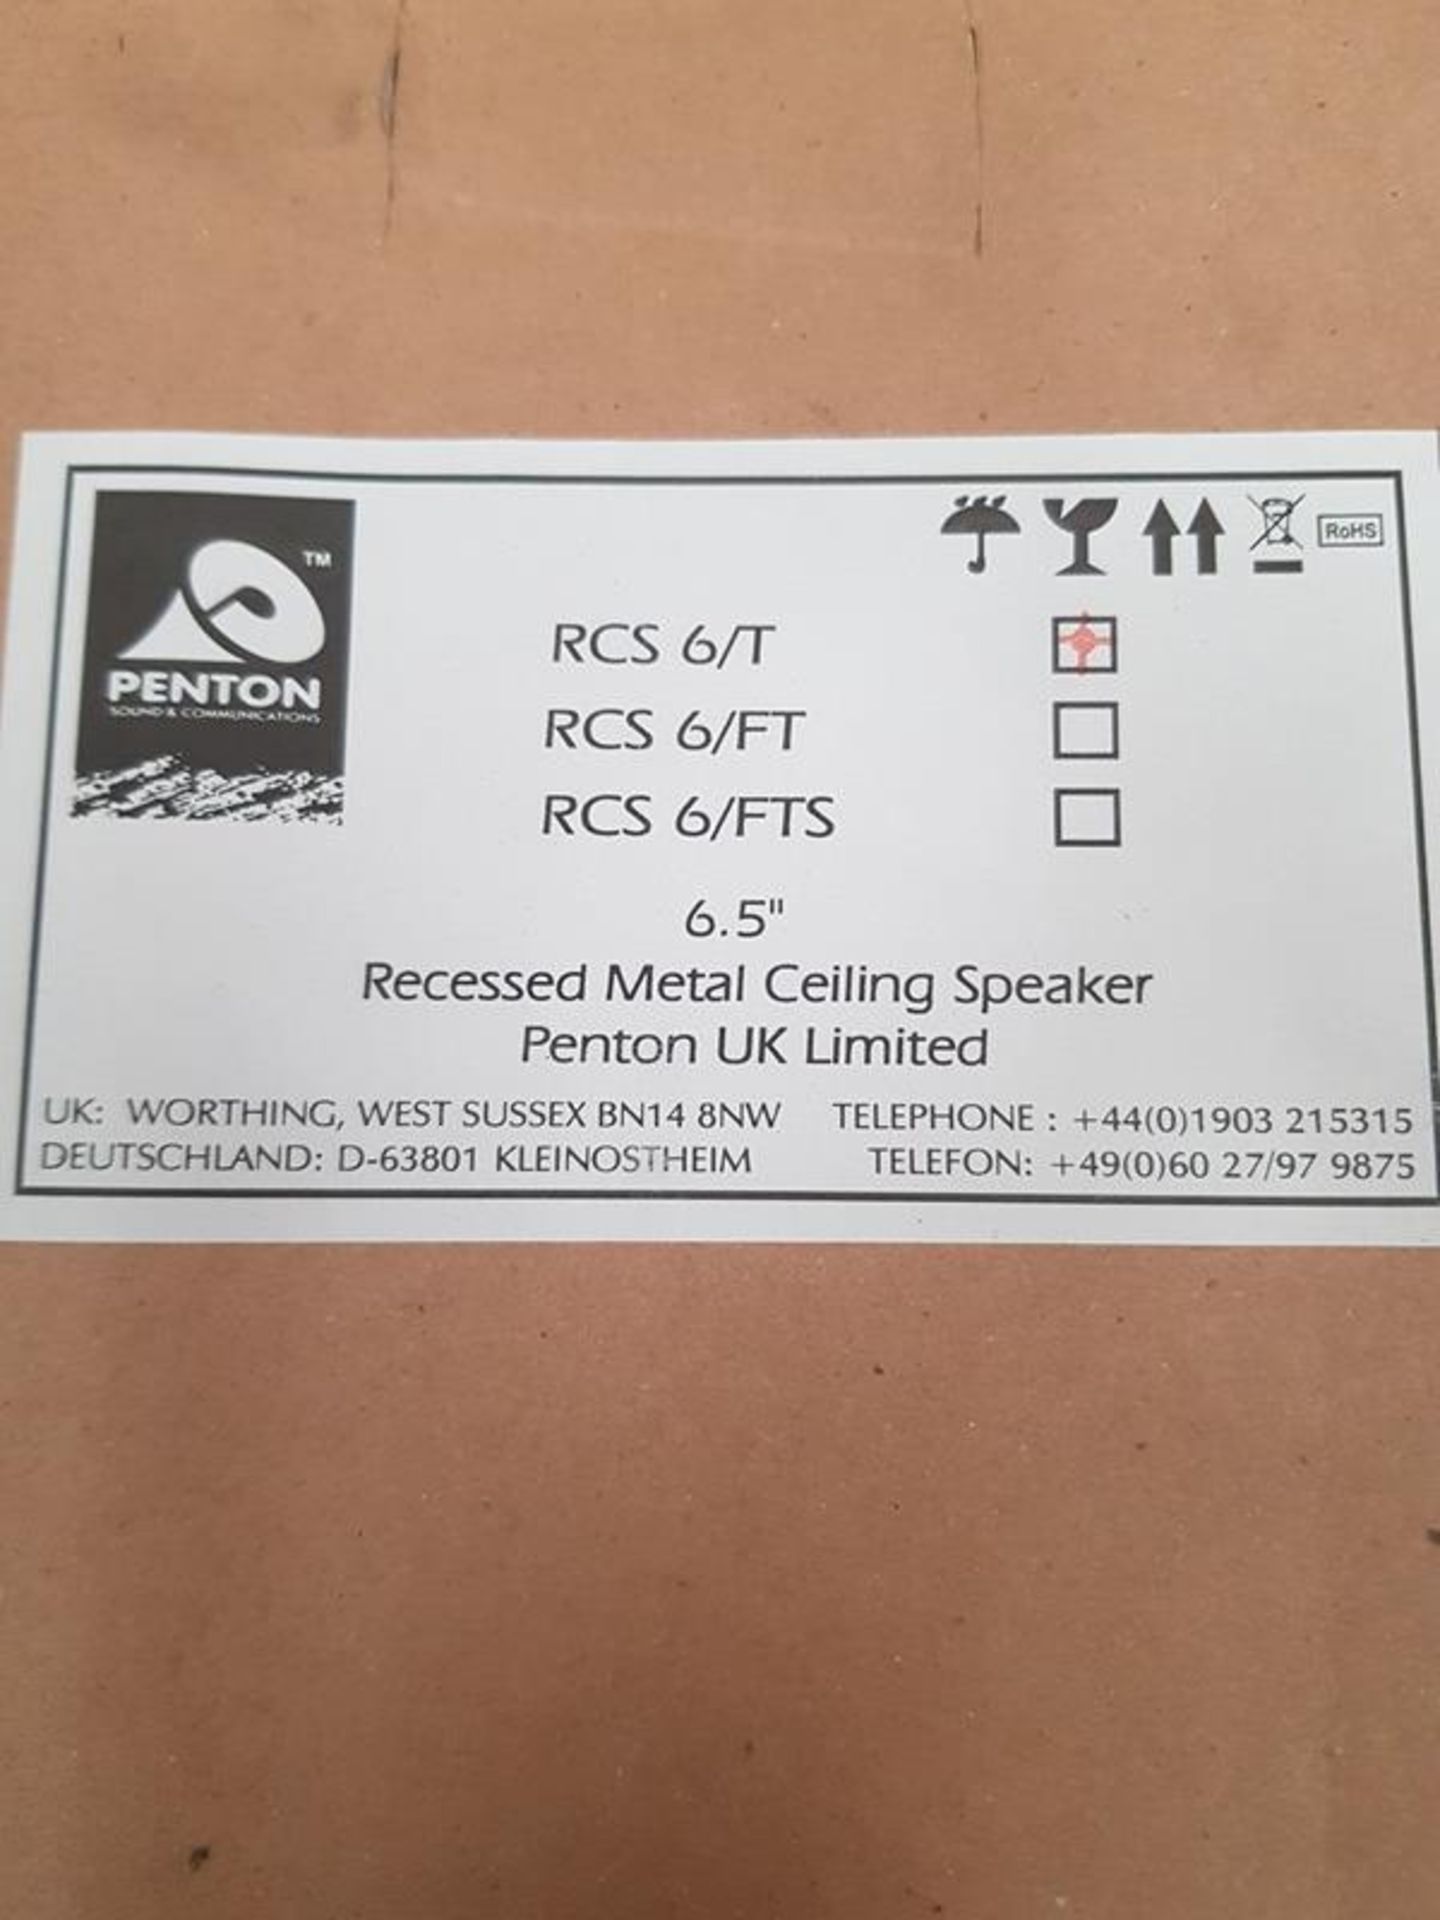 Penton RCS 6/T Recessed Metal Ceiling Speaker - unused in box - Image 4 of 4